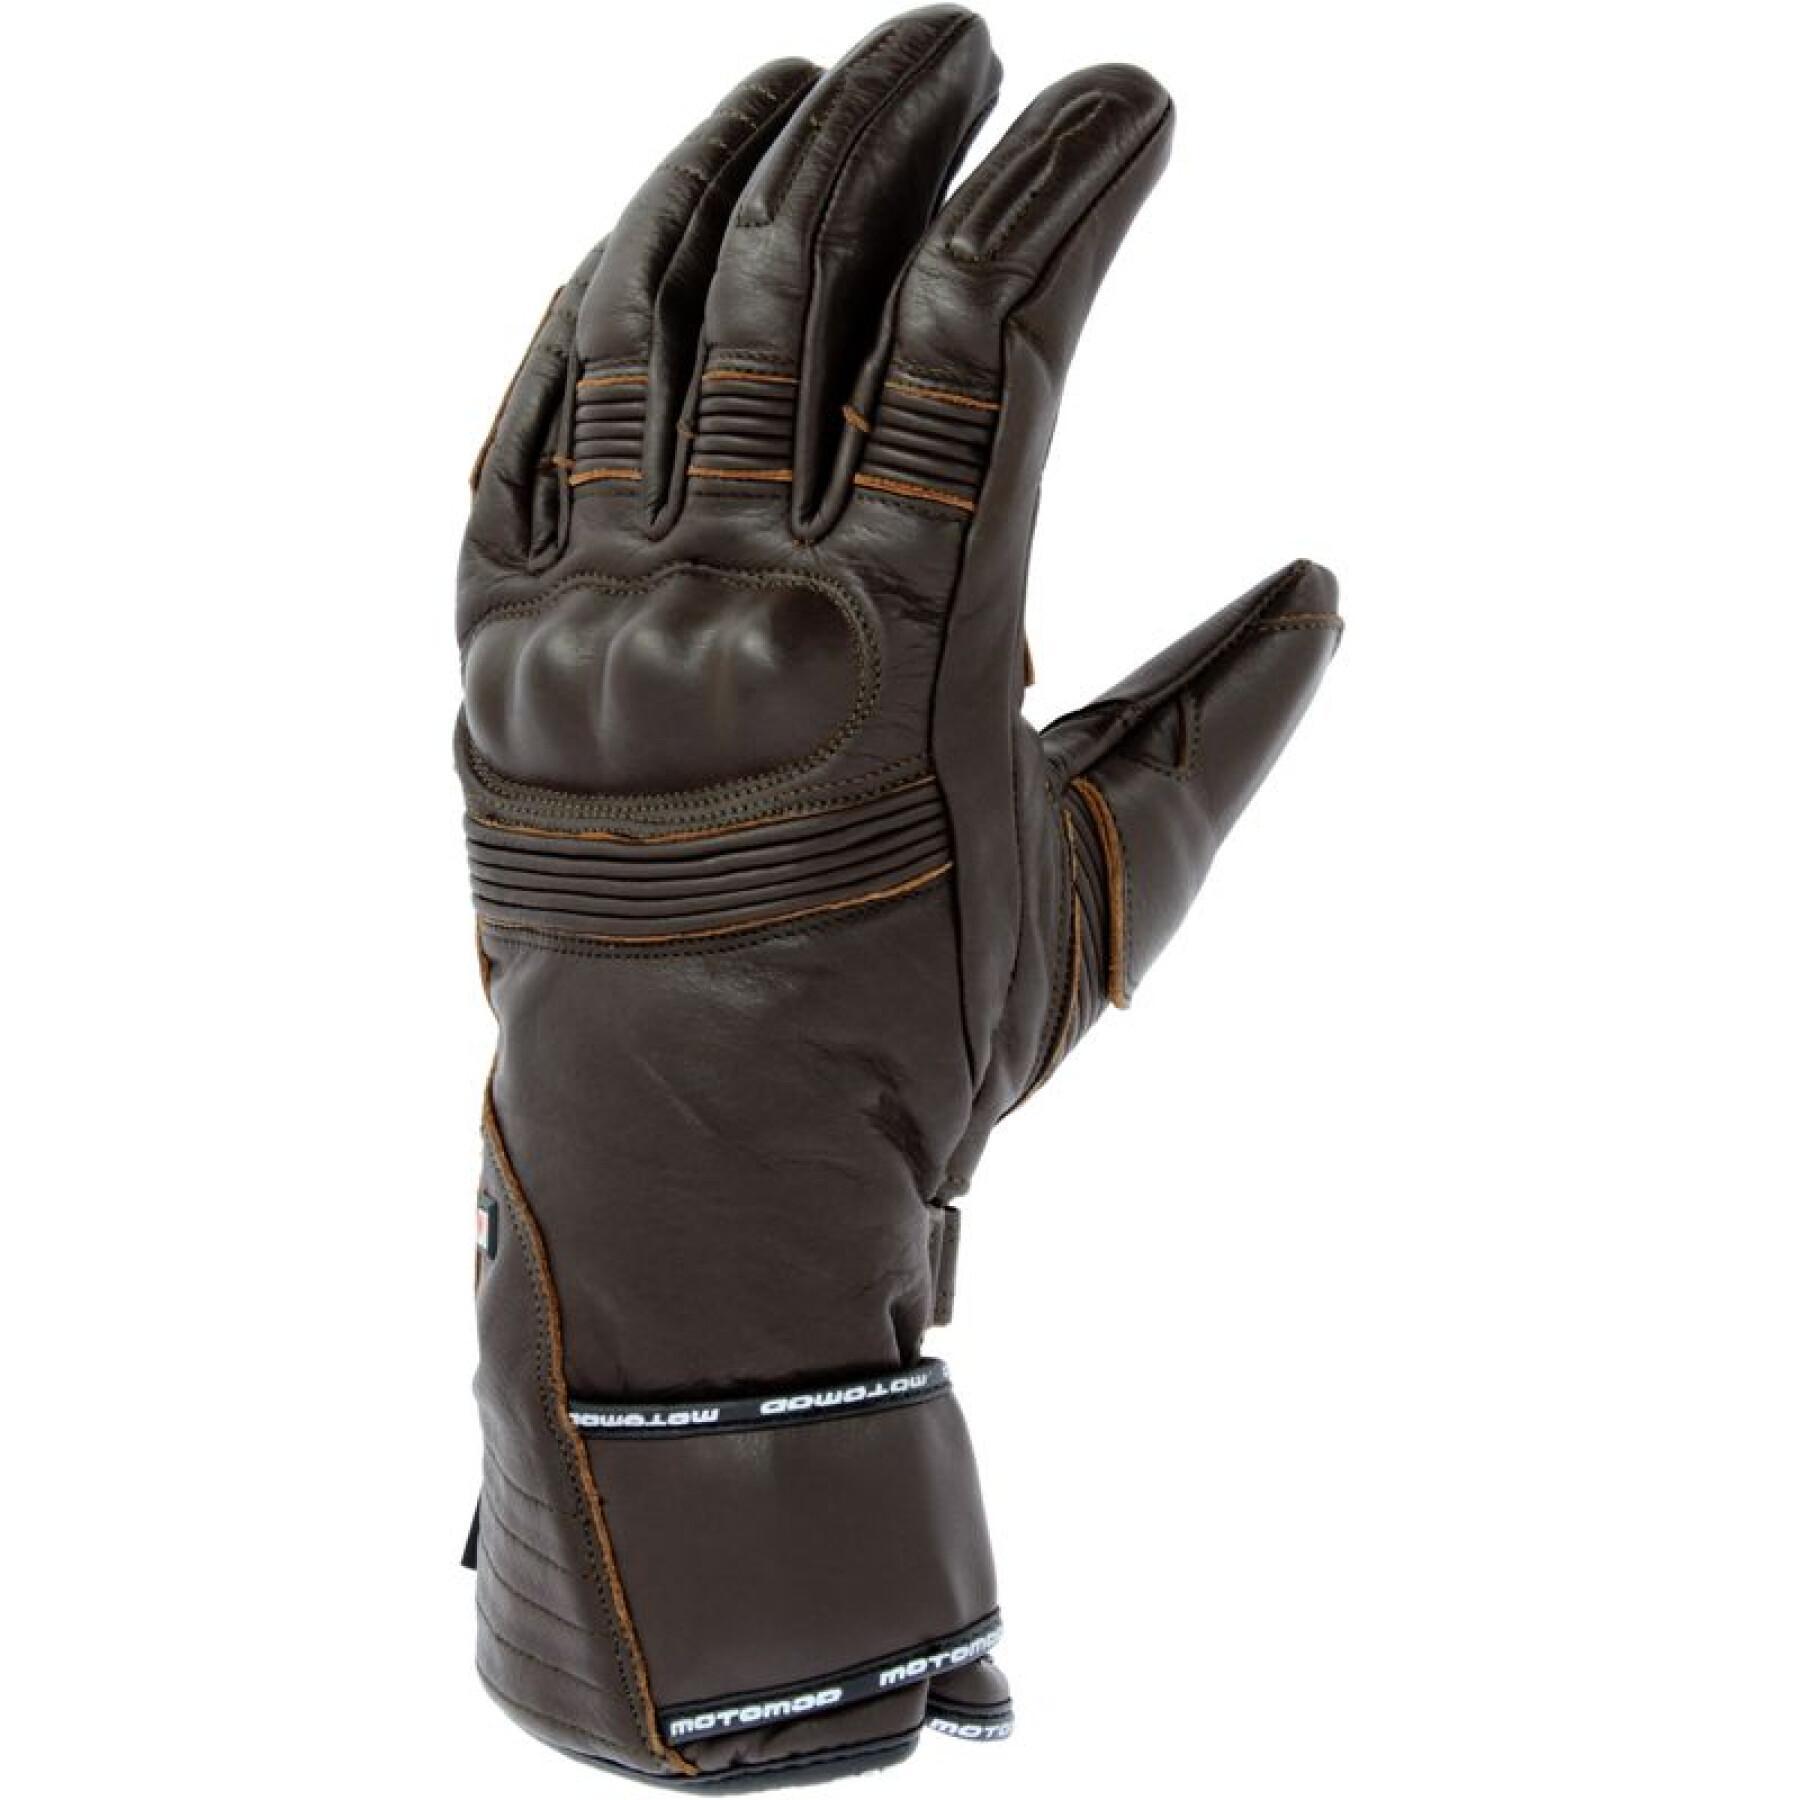 Winter motorcycle gloves Motomod RW10